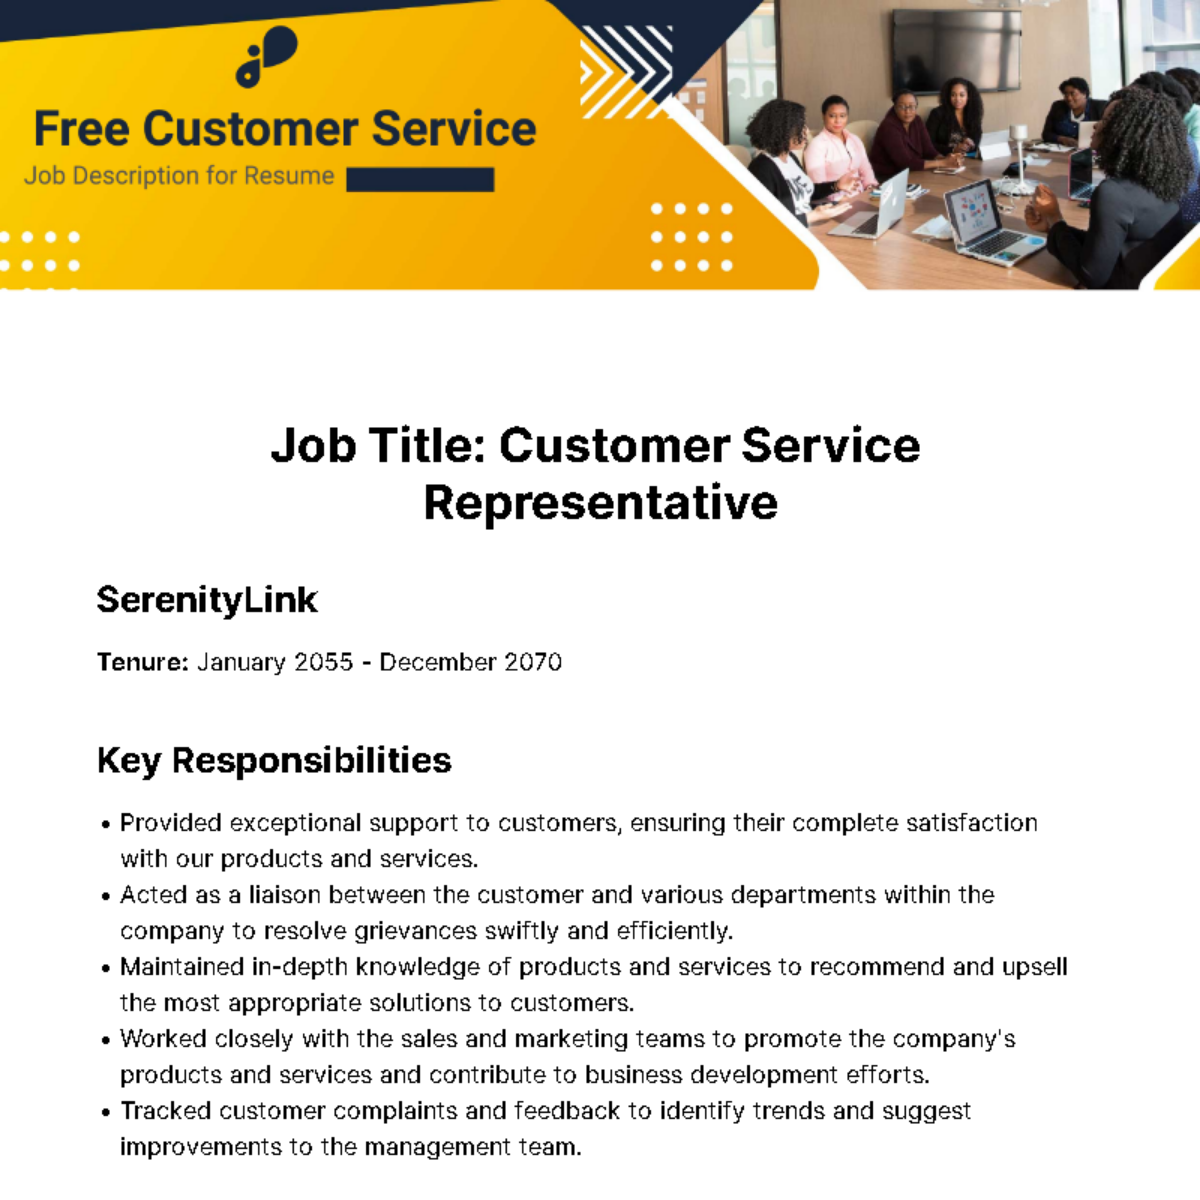 Customer Service Job Description for Resume Template